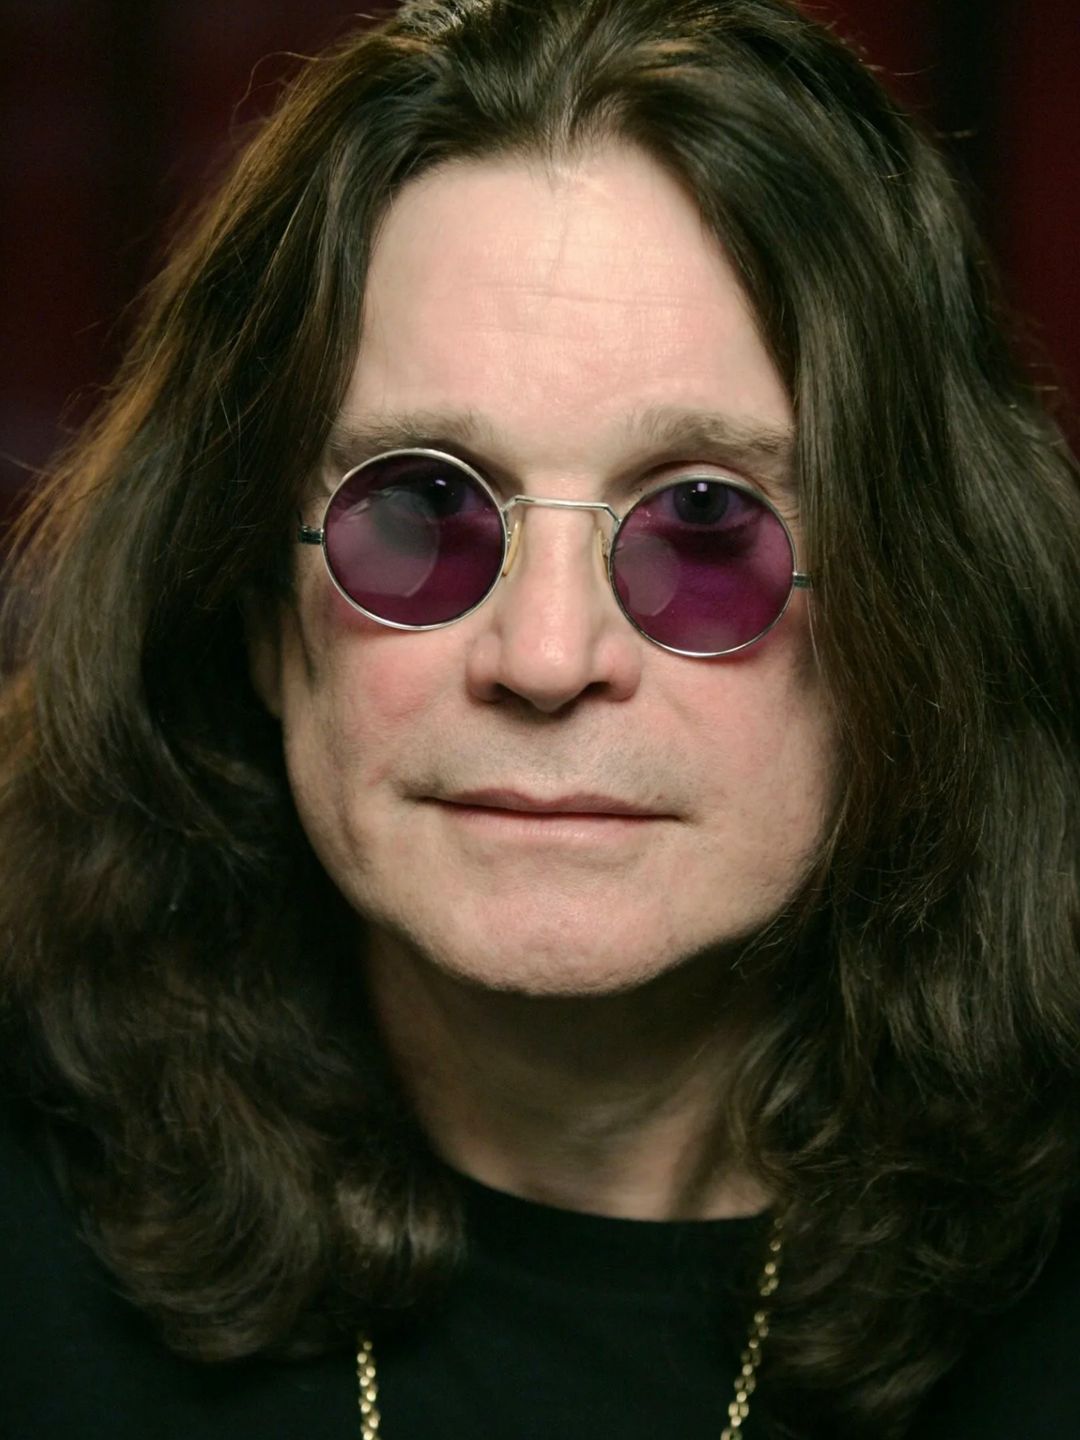 Ozzy Osbourne early career